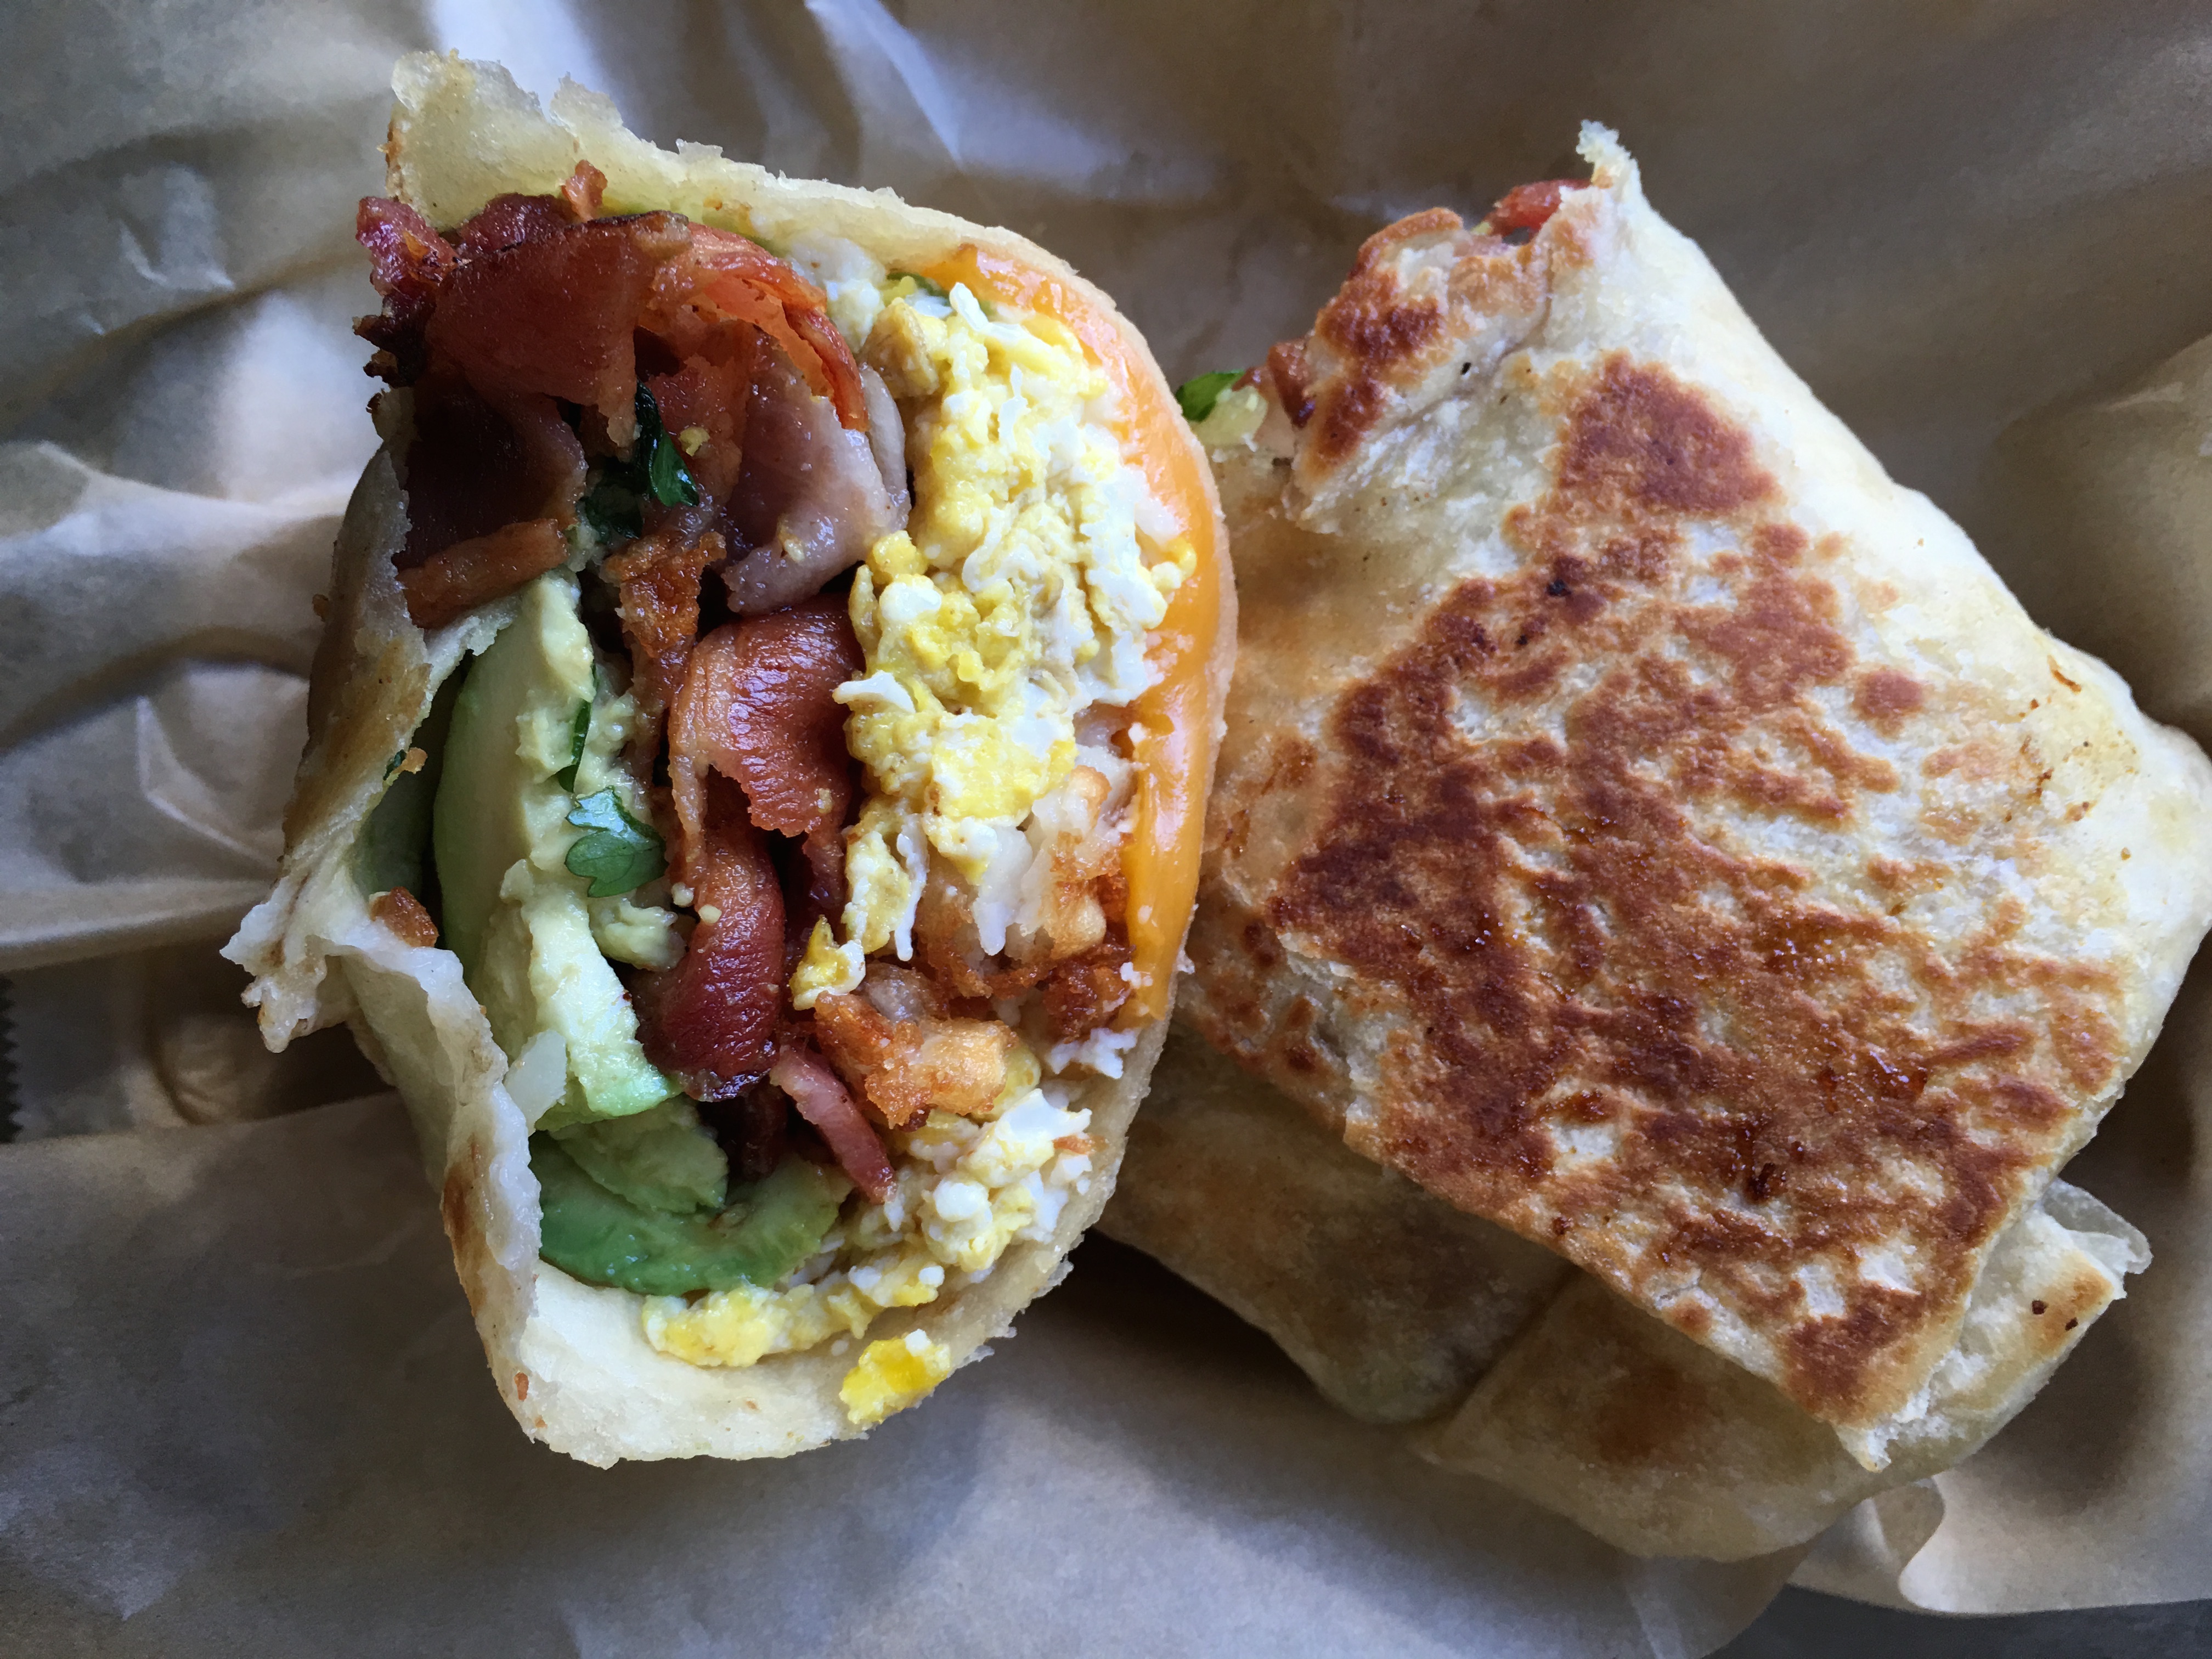 The Rooster’s Rico Suave breakfast burrito